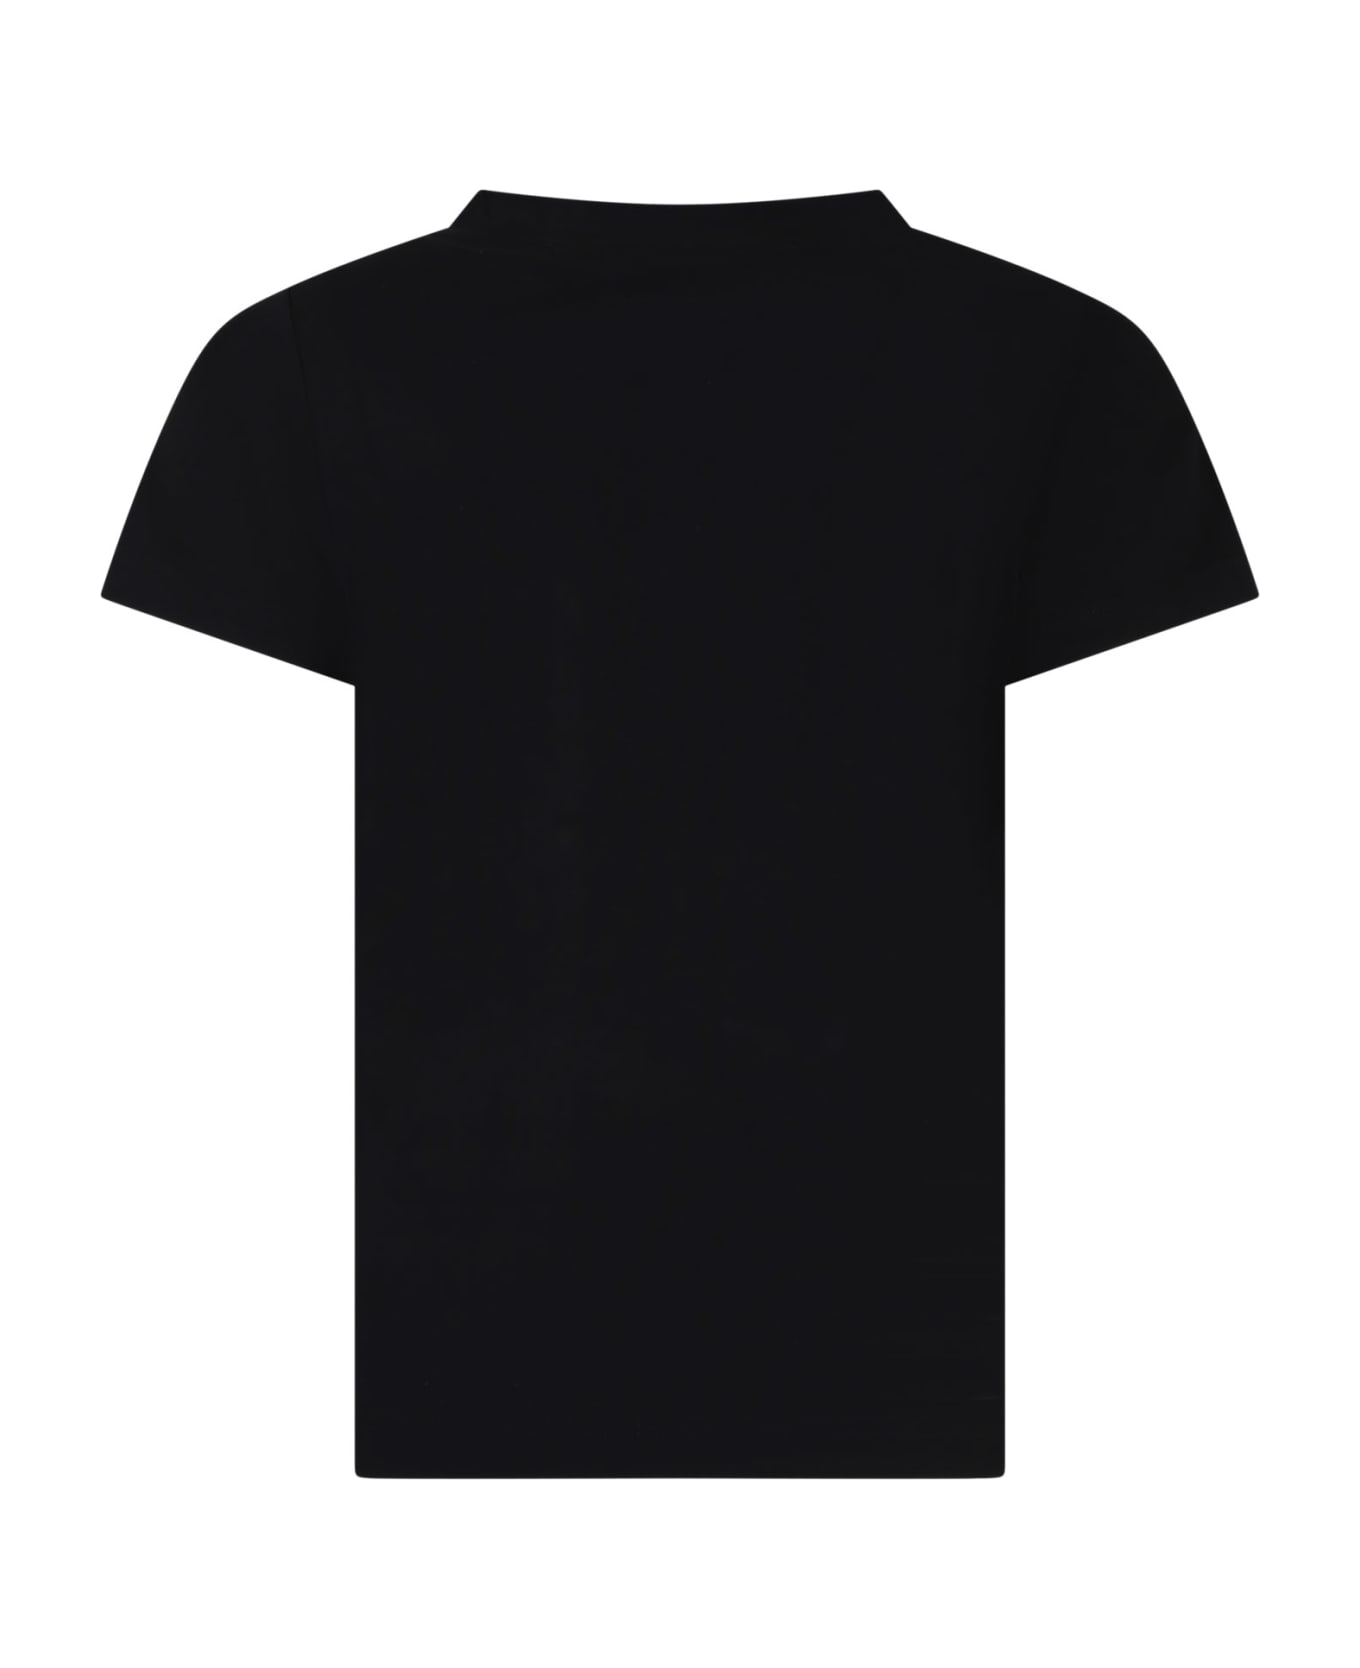 Versace Black T-shirt For Kids With Medusa - Black